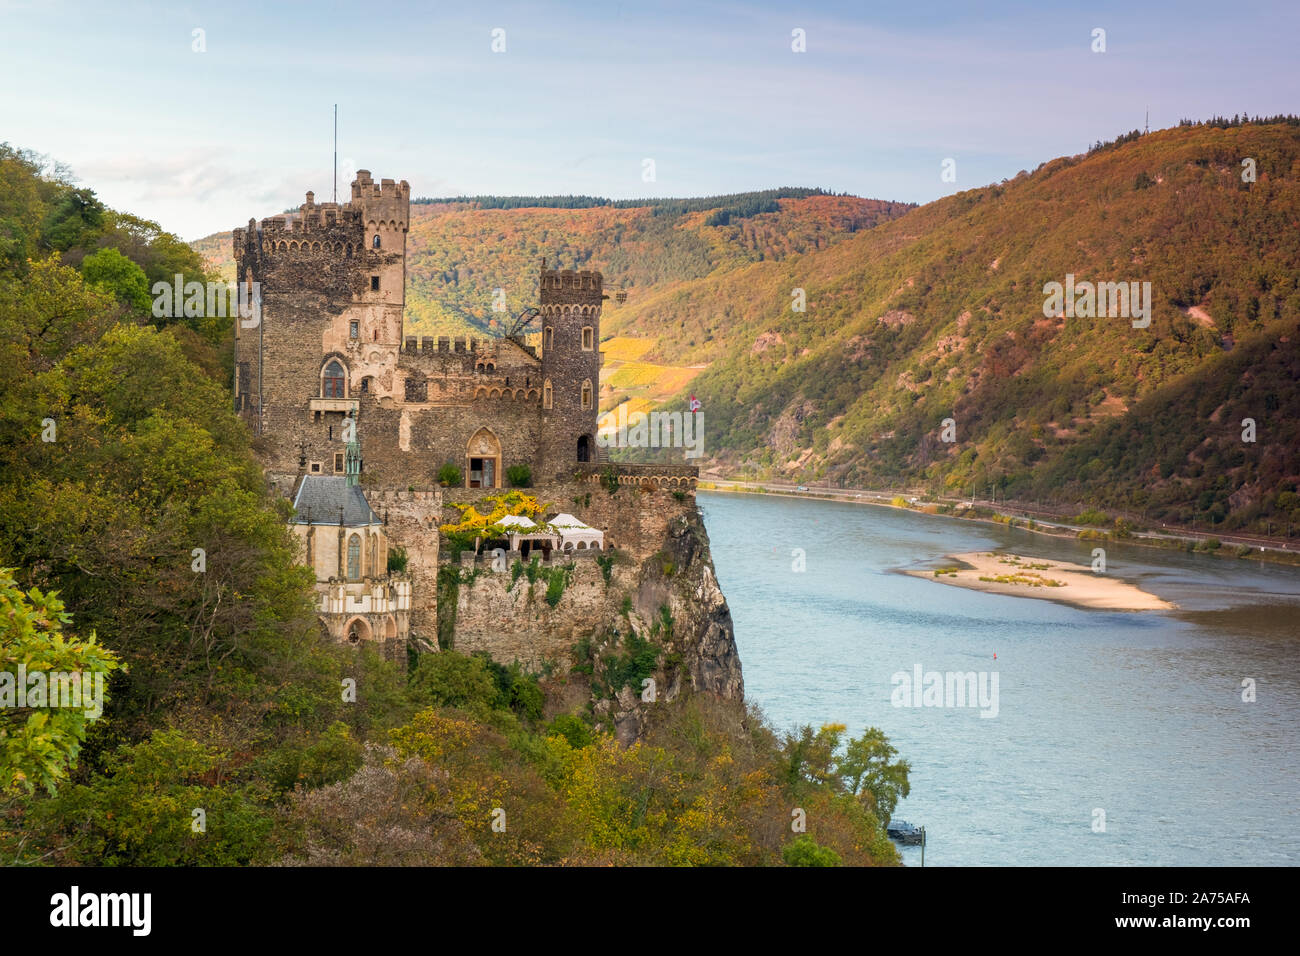 Burg Rheinstein castle, Rhine river, Germany Stock Photo